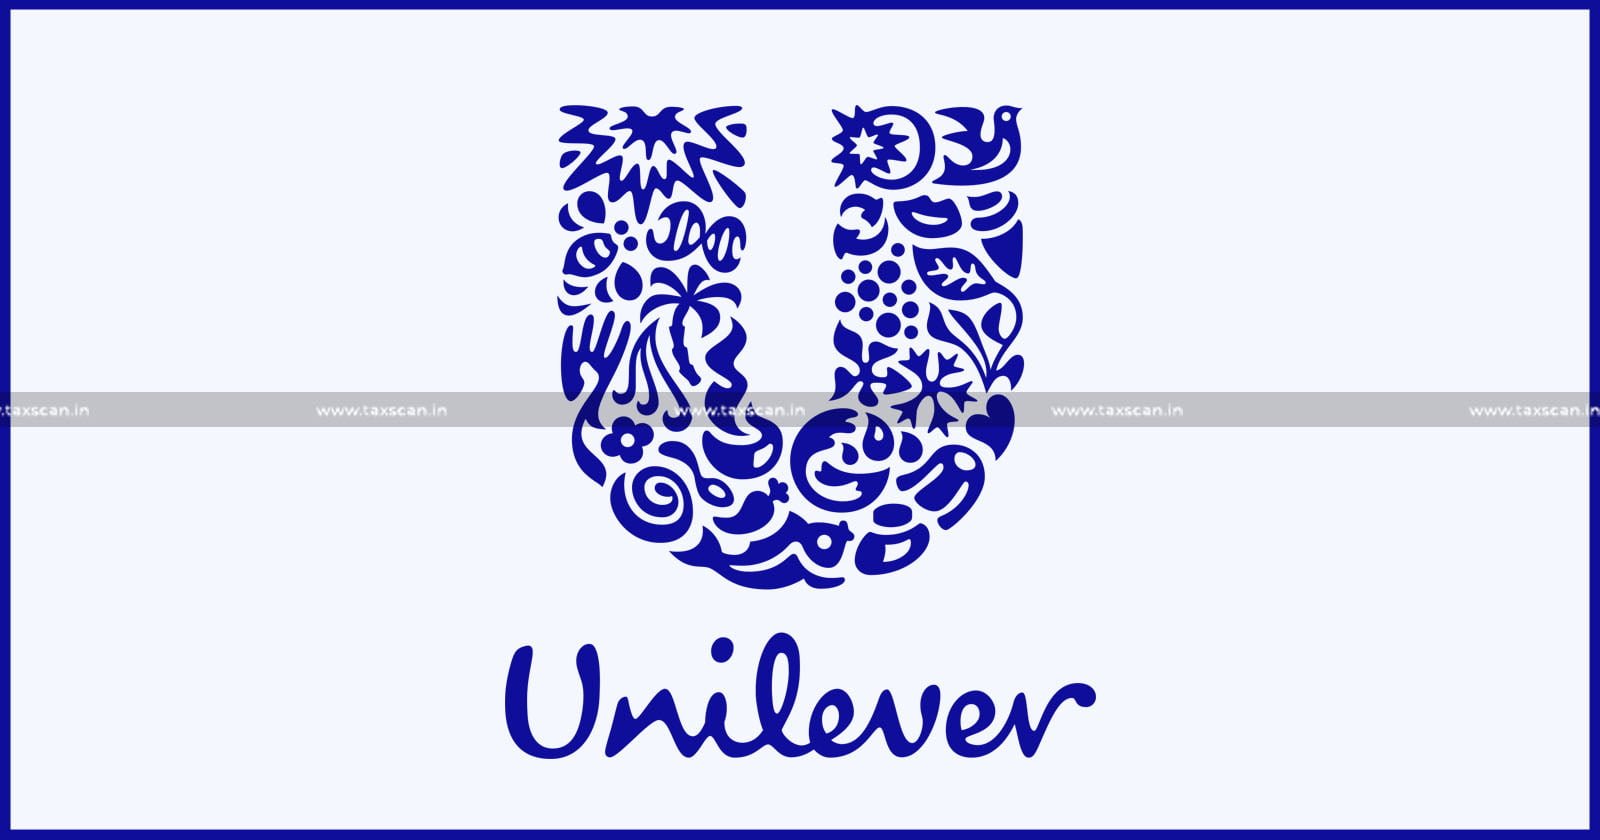 CA Vacancy - Unilever - TAXSCAN